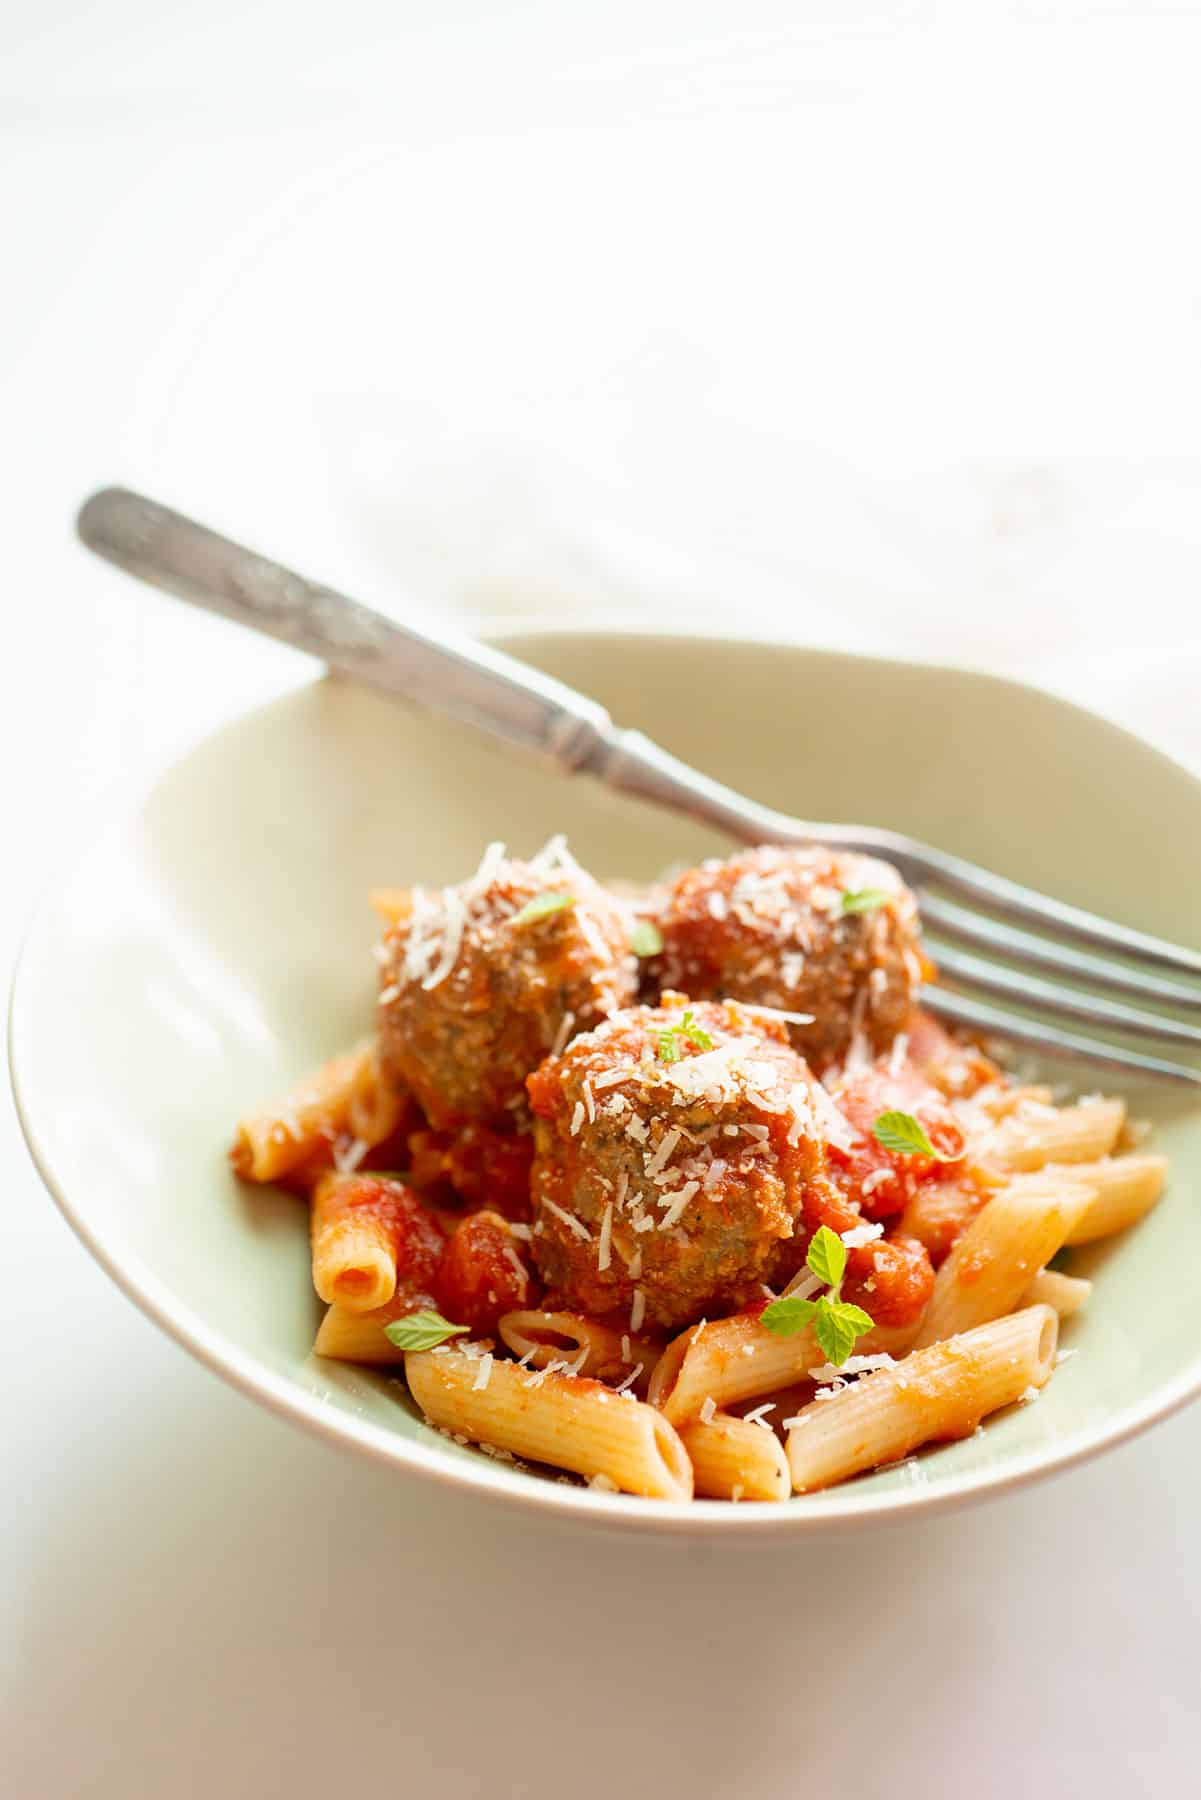 Mozzarella-stuffed meatballs with pasta.